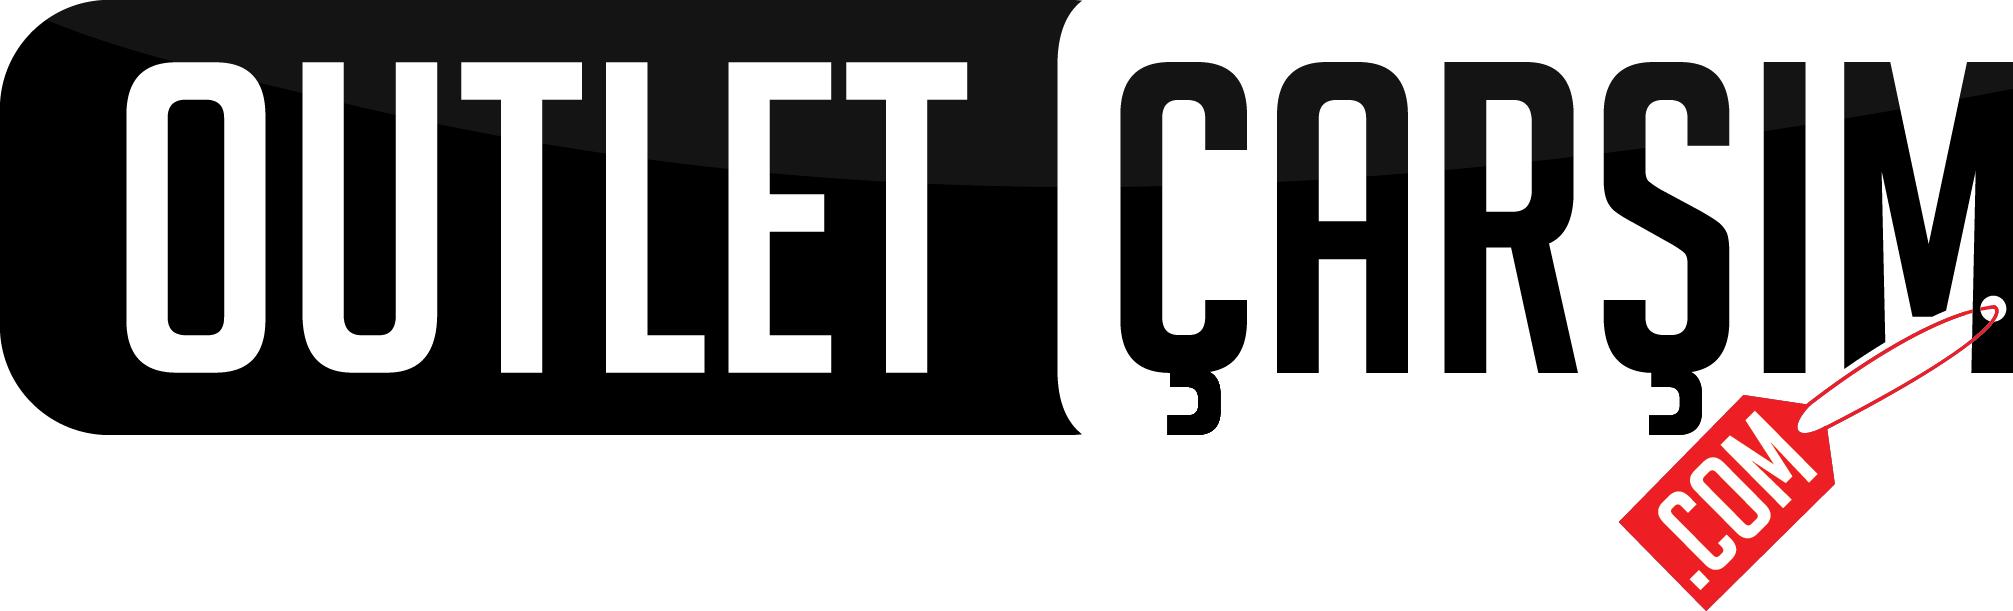 Outlets com. Terranova логотип. Outlet логотип. Outlet надпись. Terranova Outlet логотип.